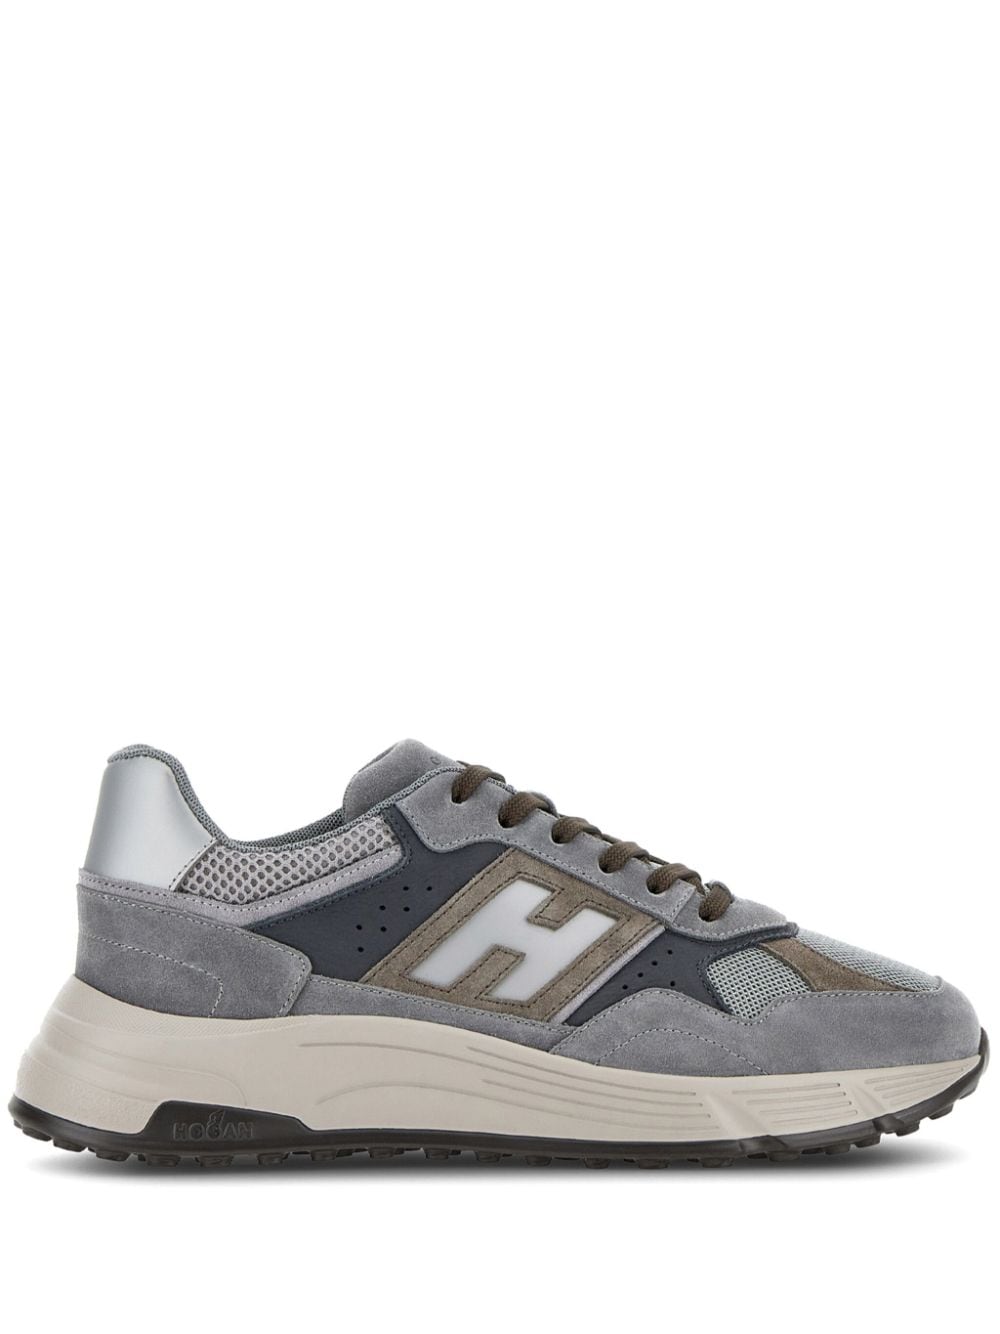 Hogan Hyperlight low-top sneakers - Grey von Hogan